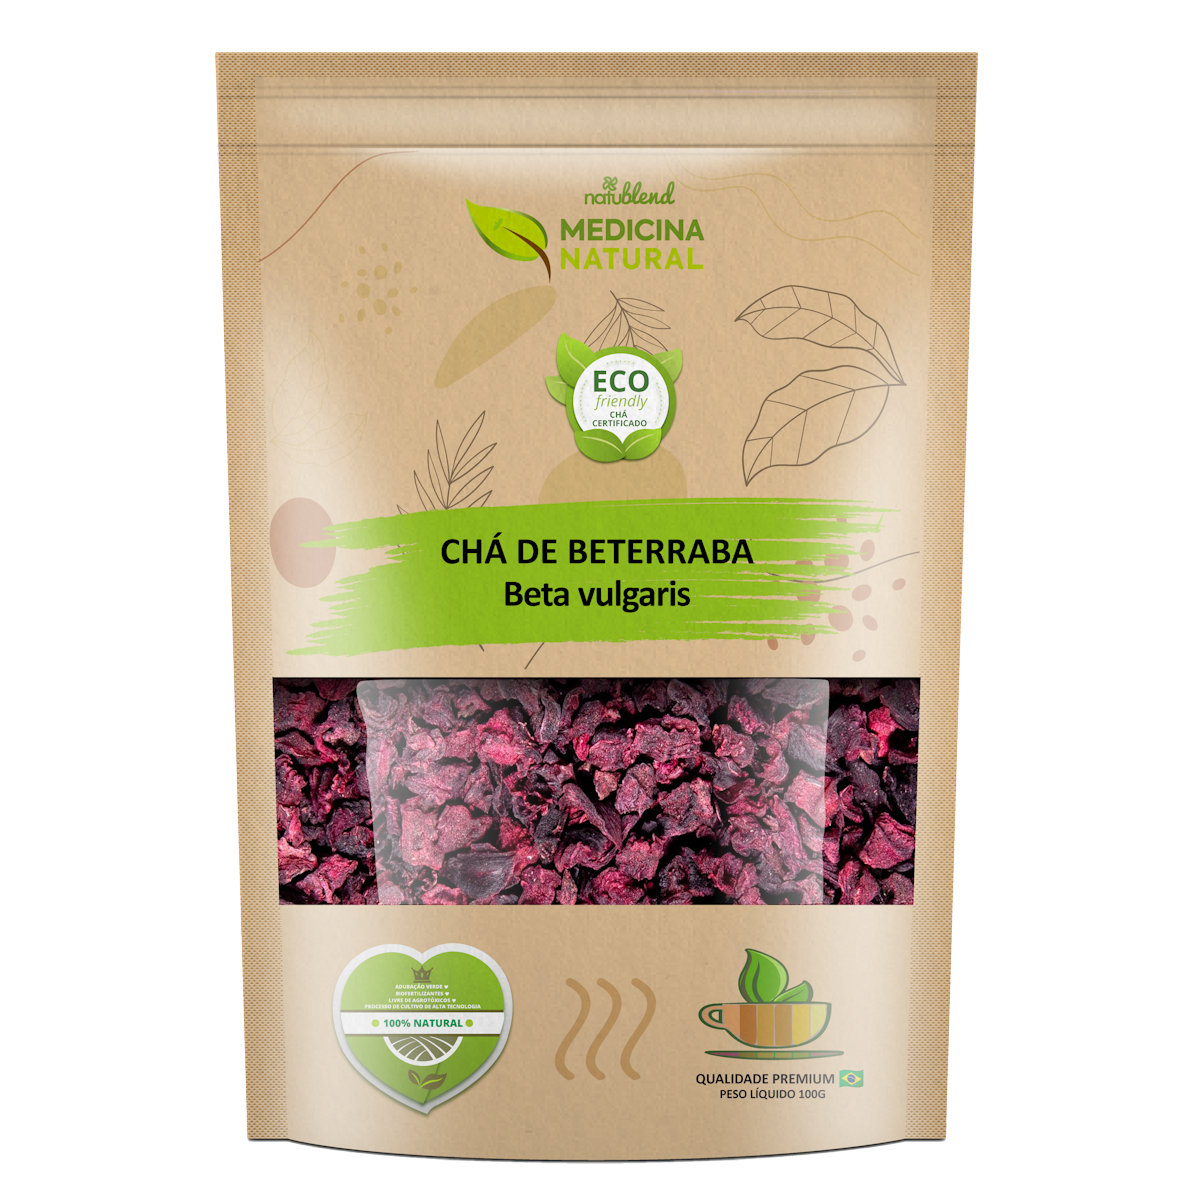 Chá de Beterraba - Beta vulgaris - Medicina Natural